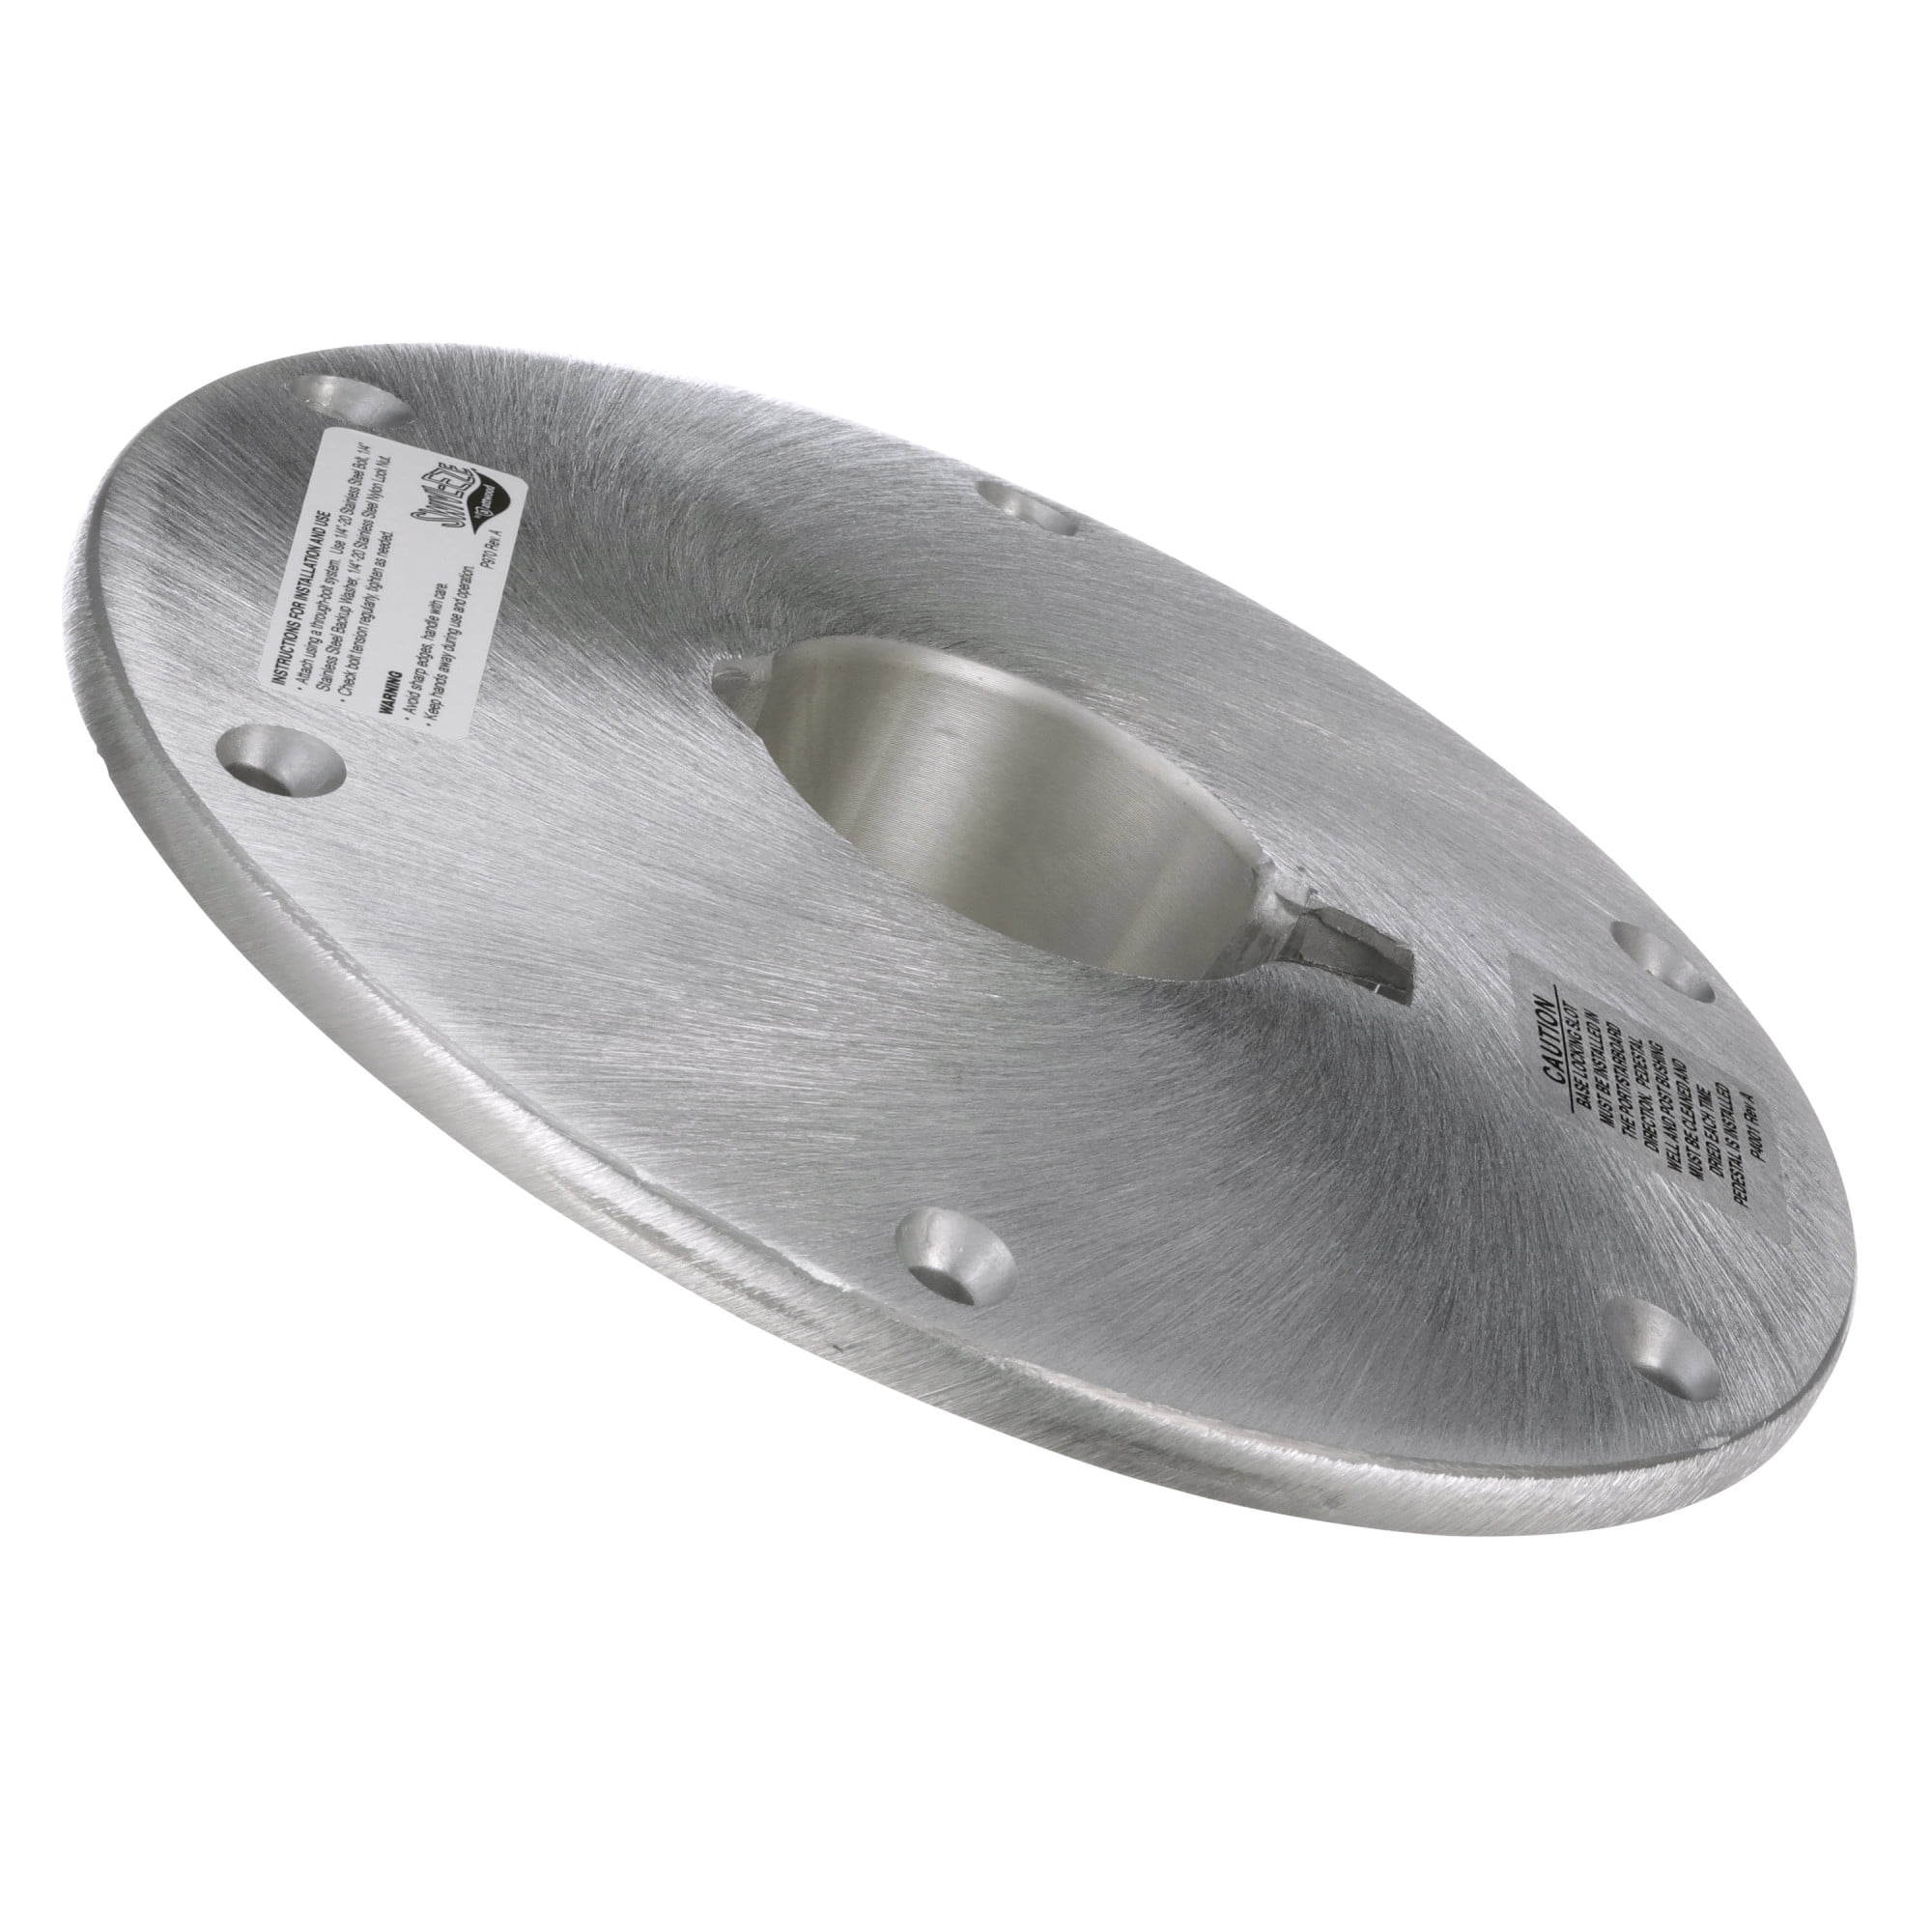 Portable Aluminum Diamond Plate Pedestal Boat Seat Base